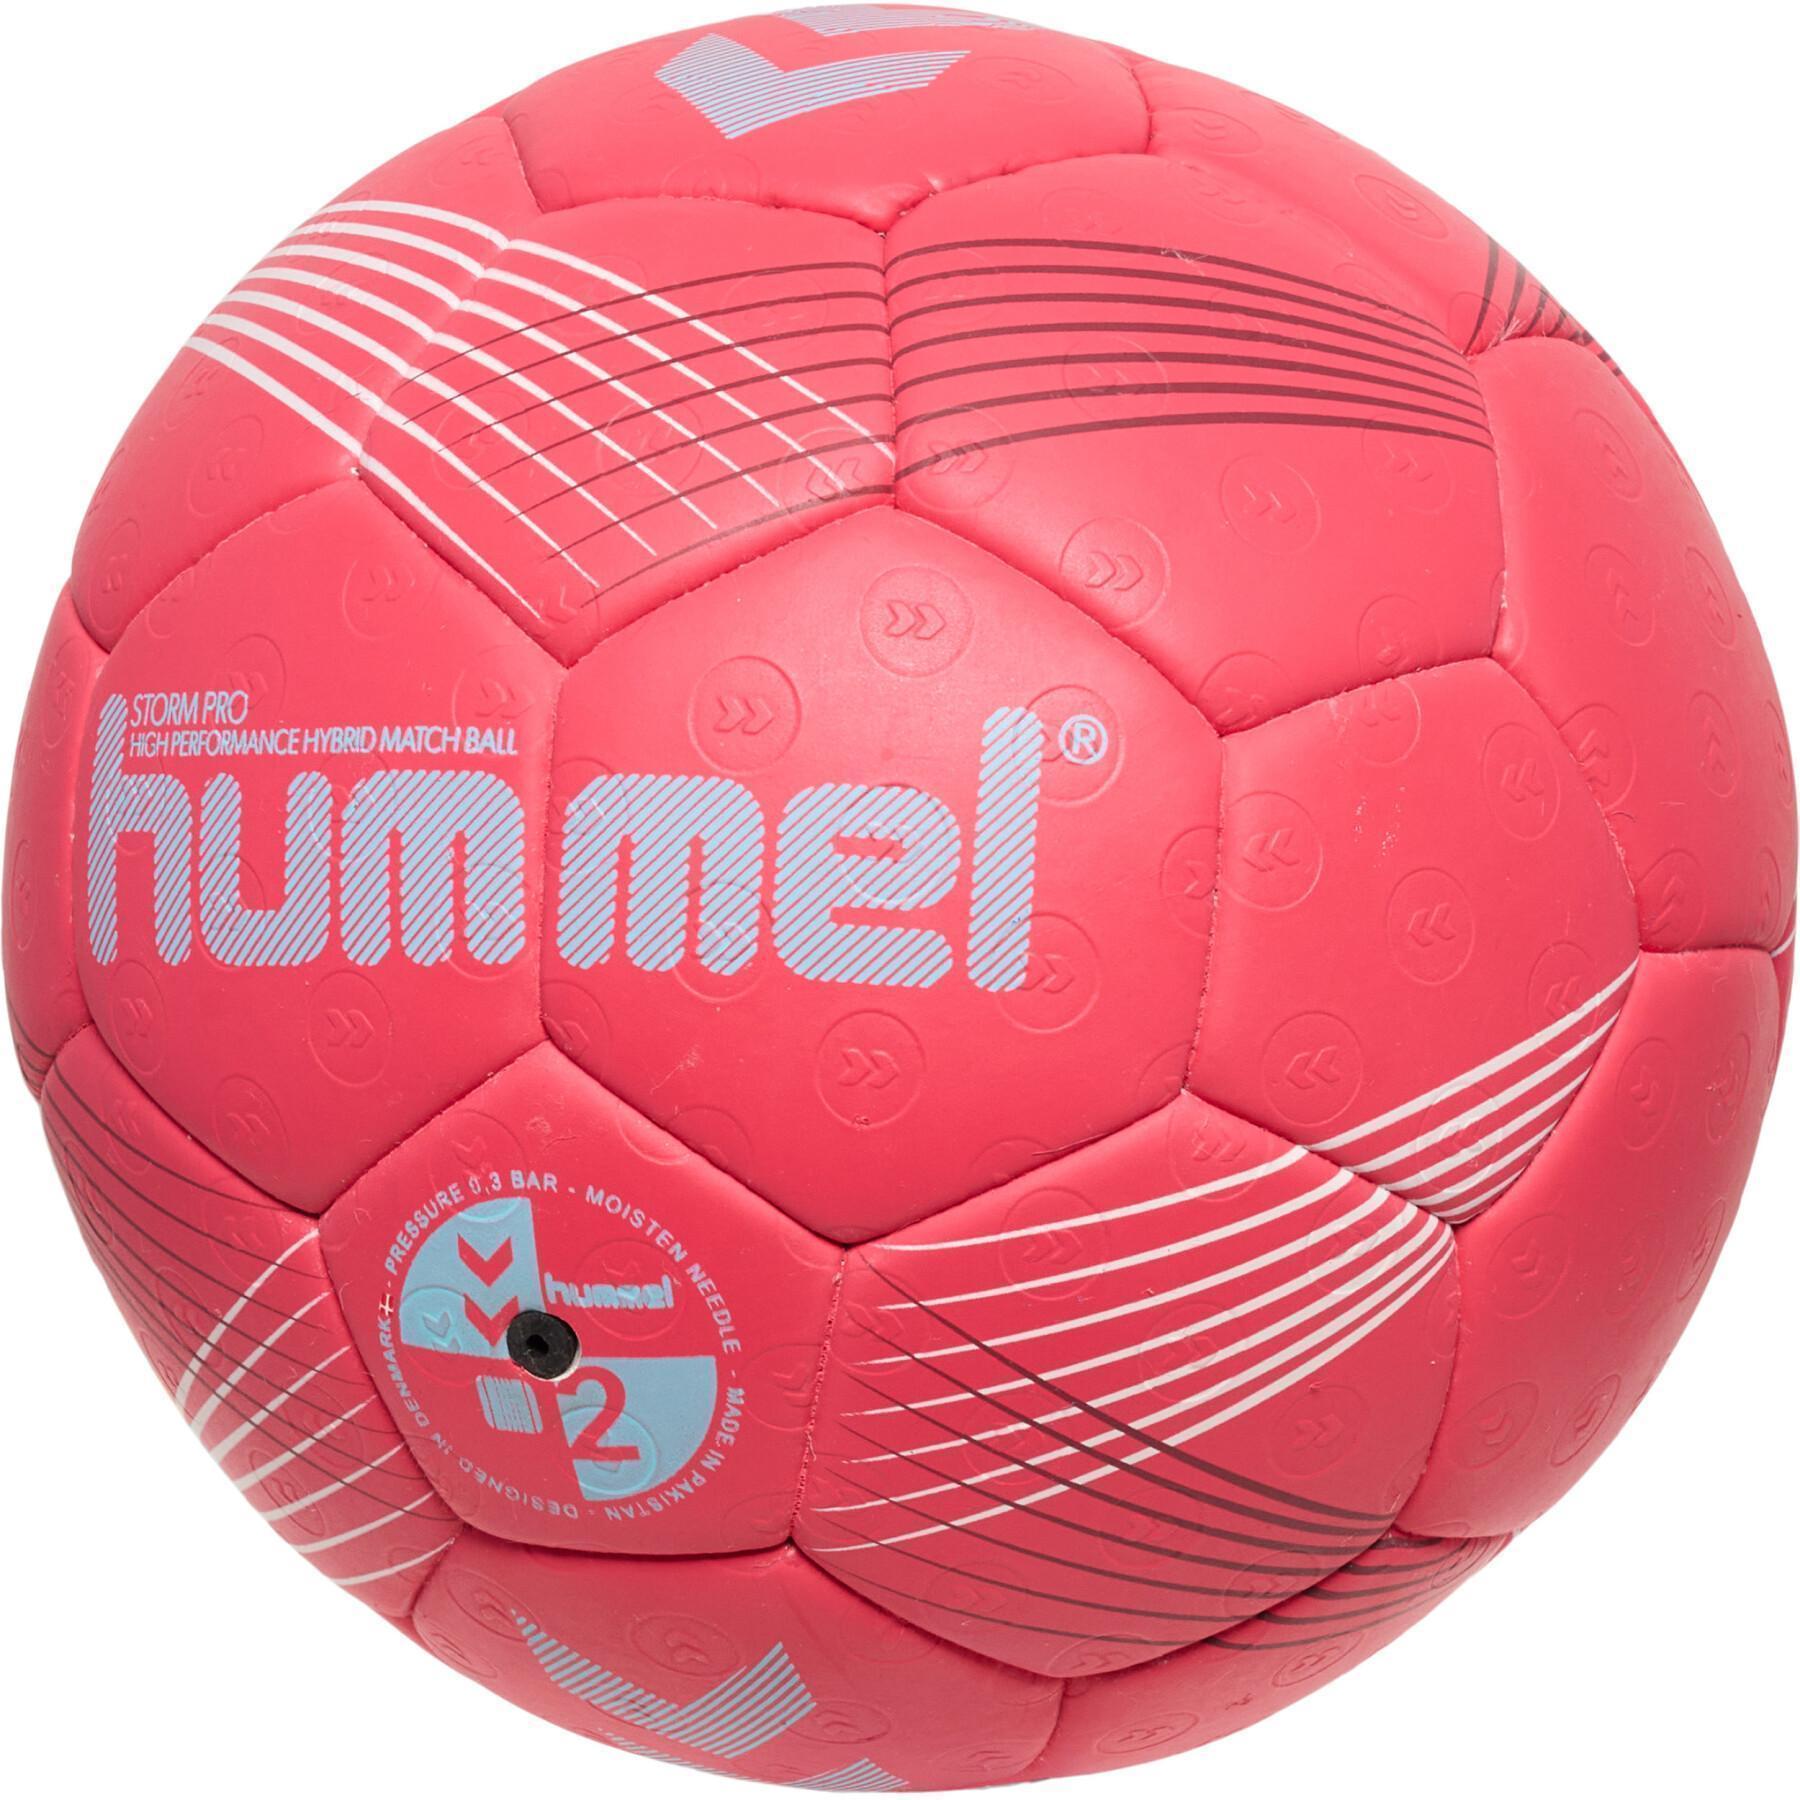 Ball Hummel Storm Pro